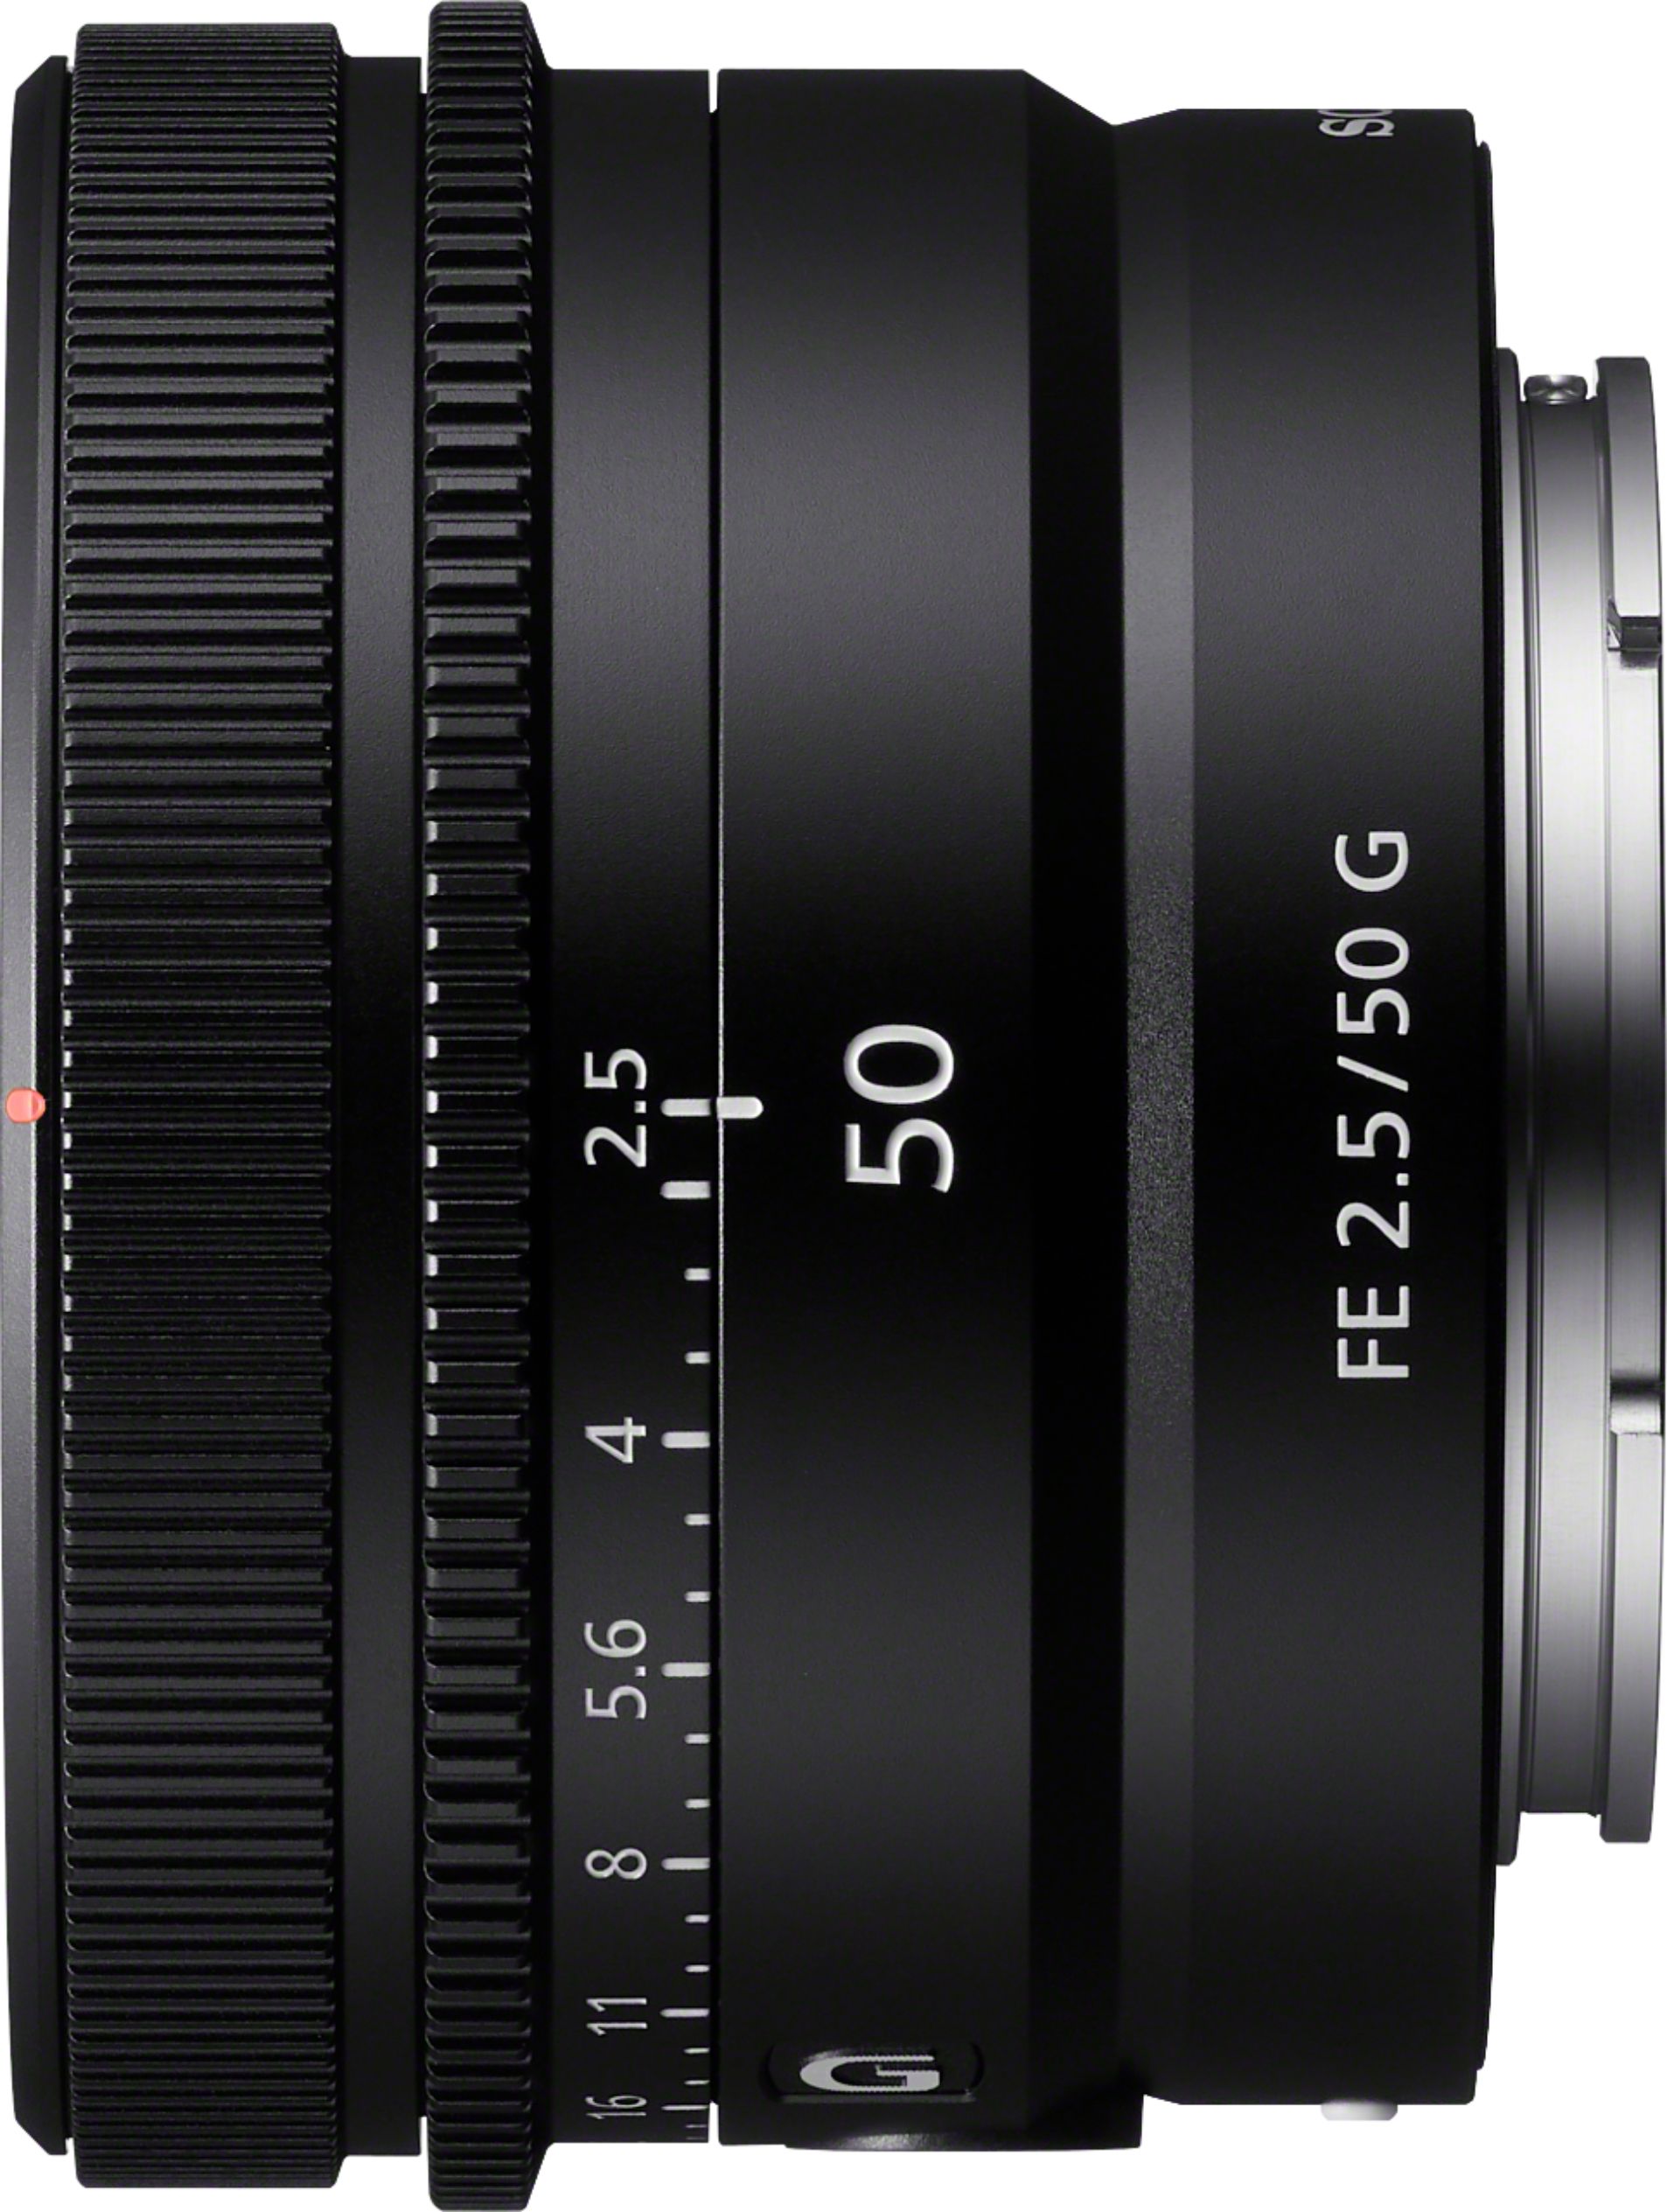 Angle View: Olympus - M.Zuiko Digital ED 30mm f/3.5 Macro Lens for OM-D and PEN Cameras - Black - Black